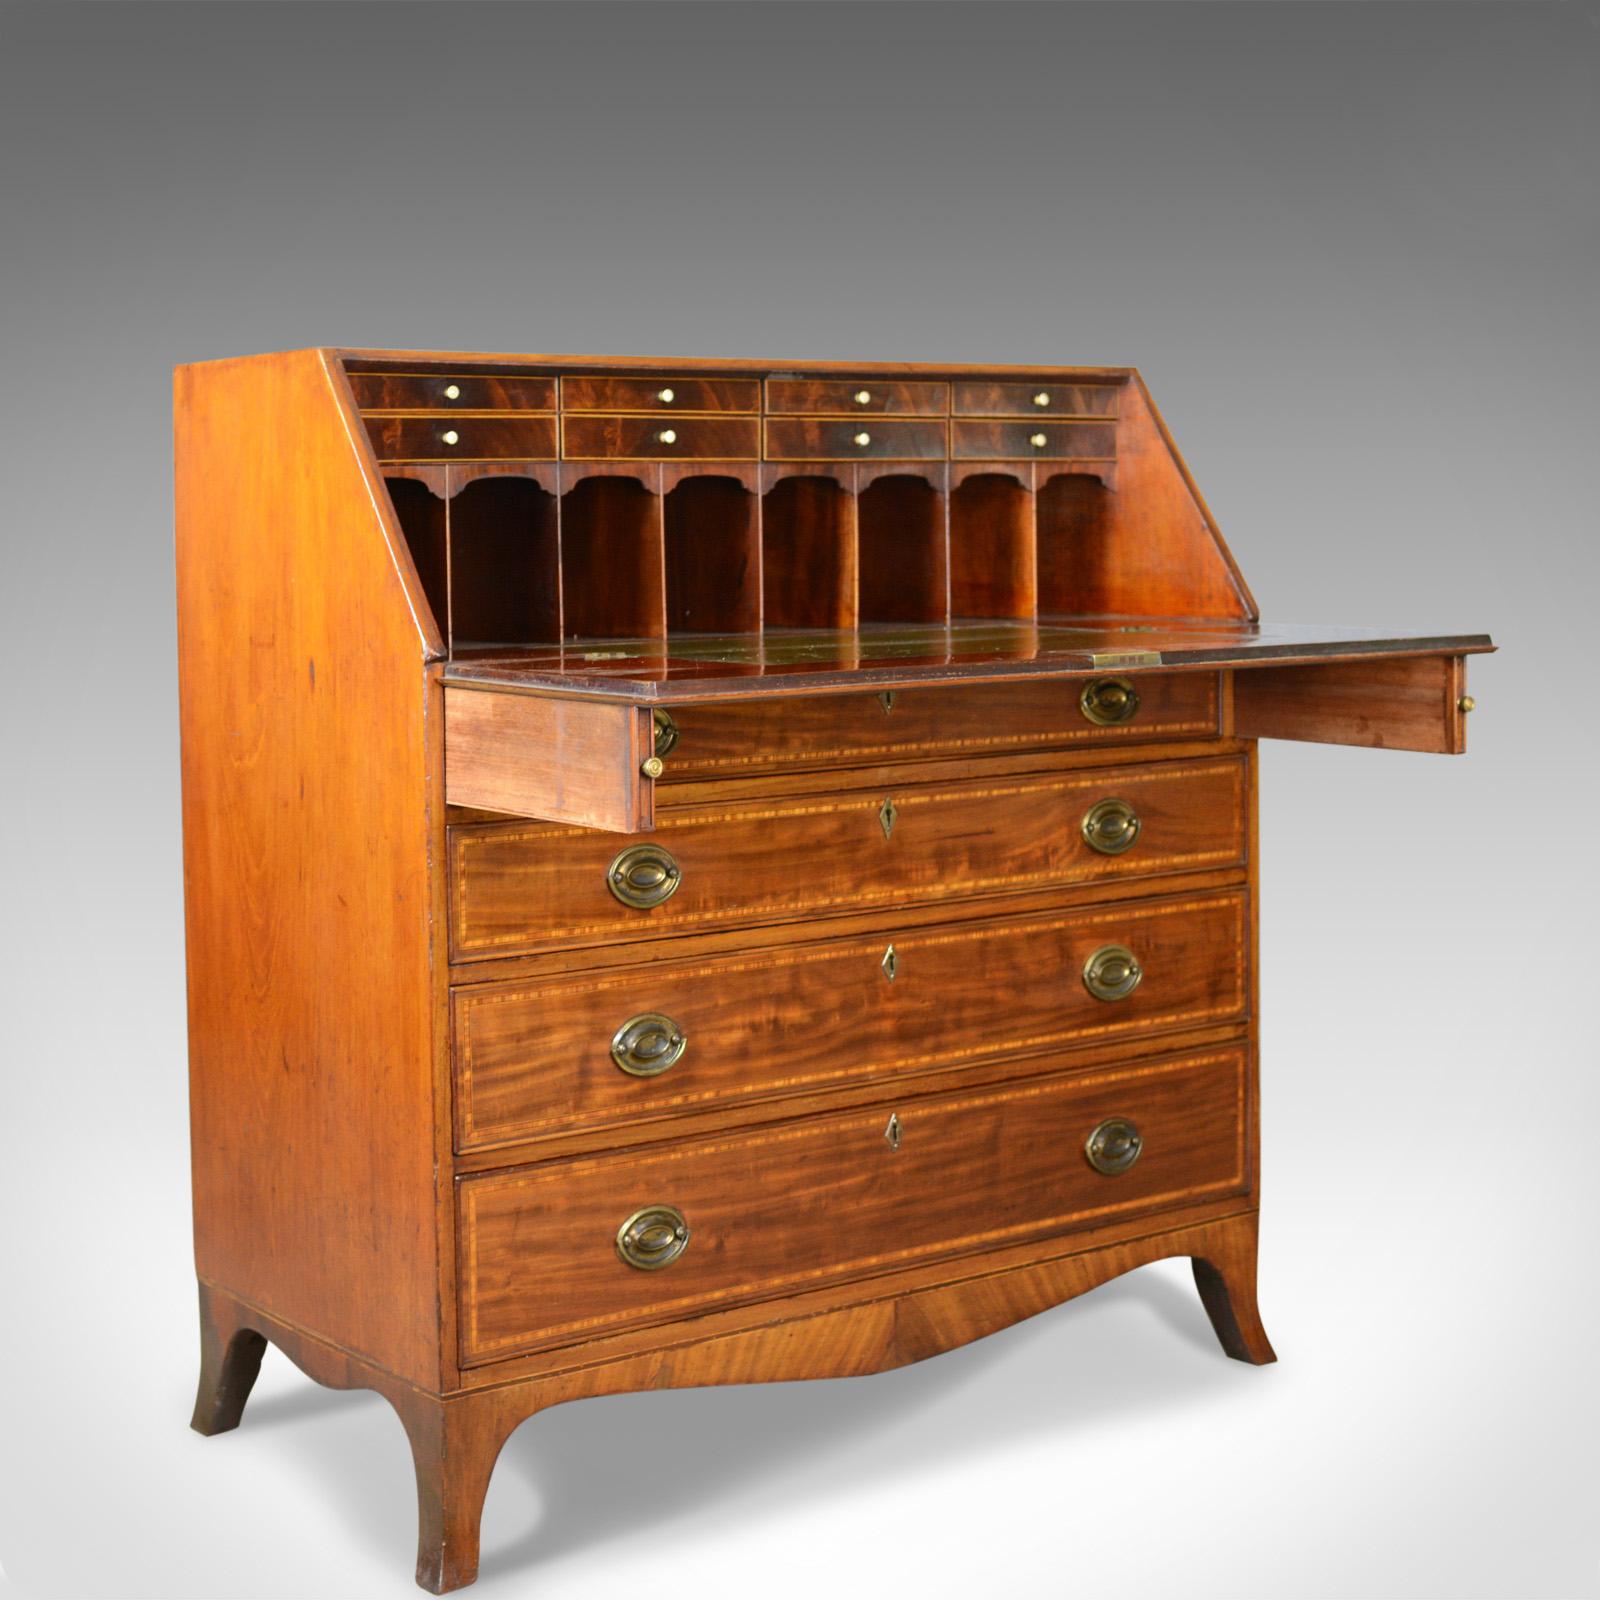 Antique Bureau, Mahogany, English, Georgian, Desk, 18th Century, circa 1770 In Good Condition For Sale In Hele, Devon, GB